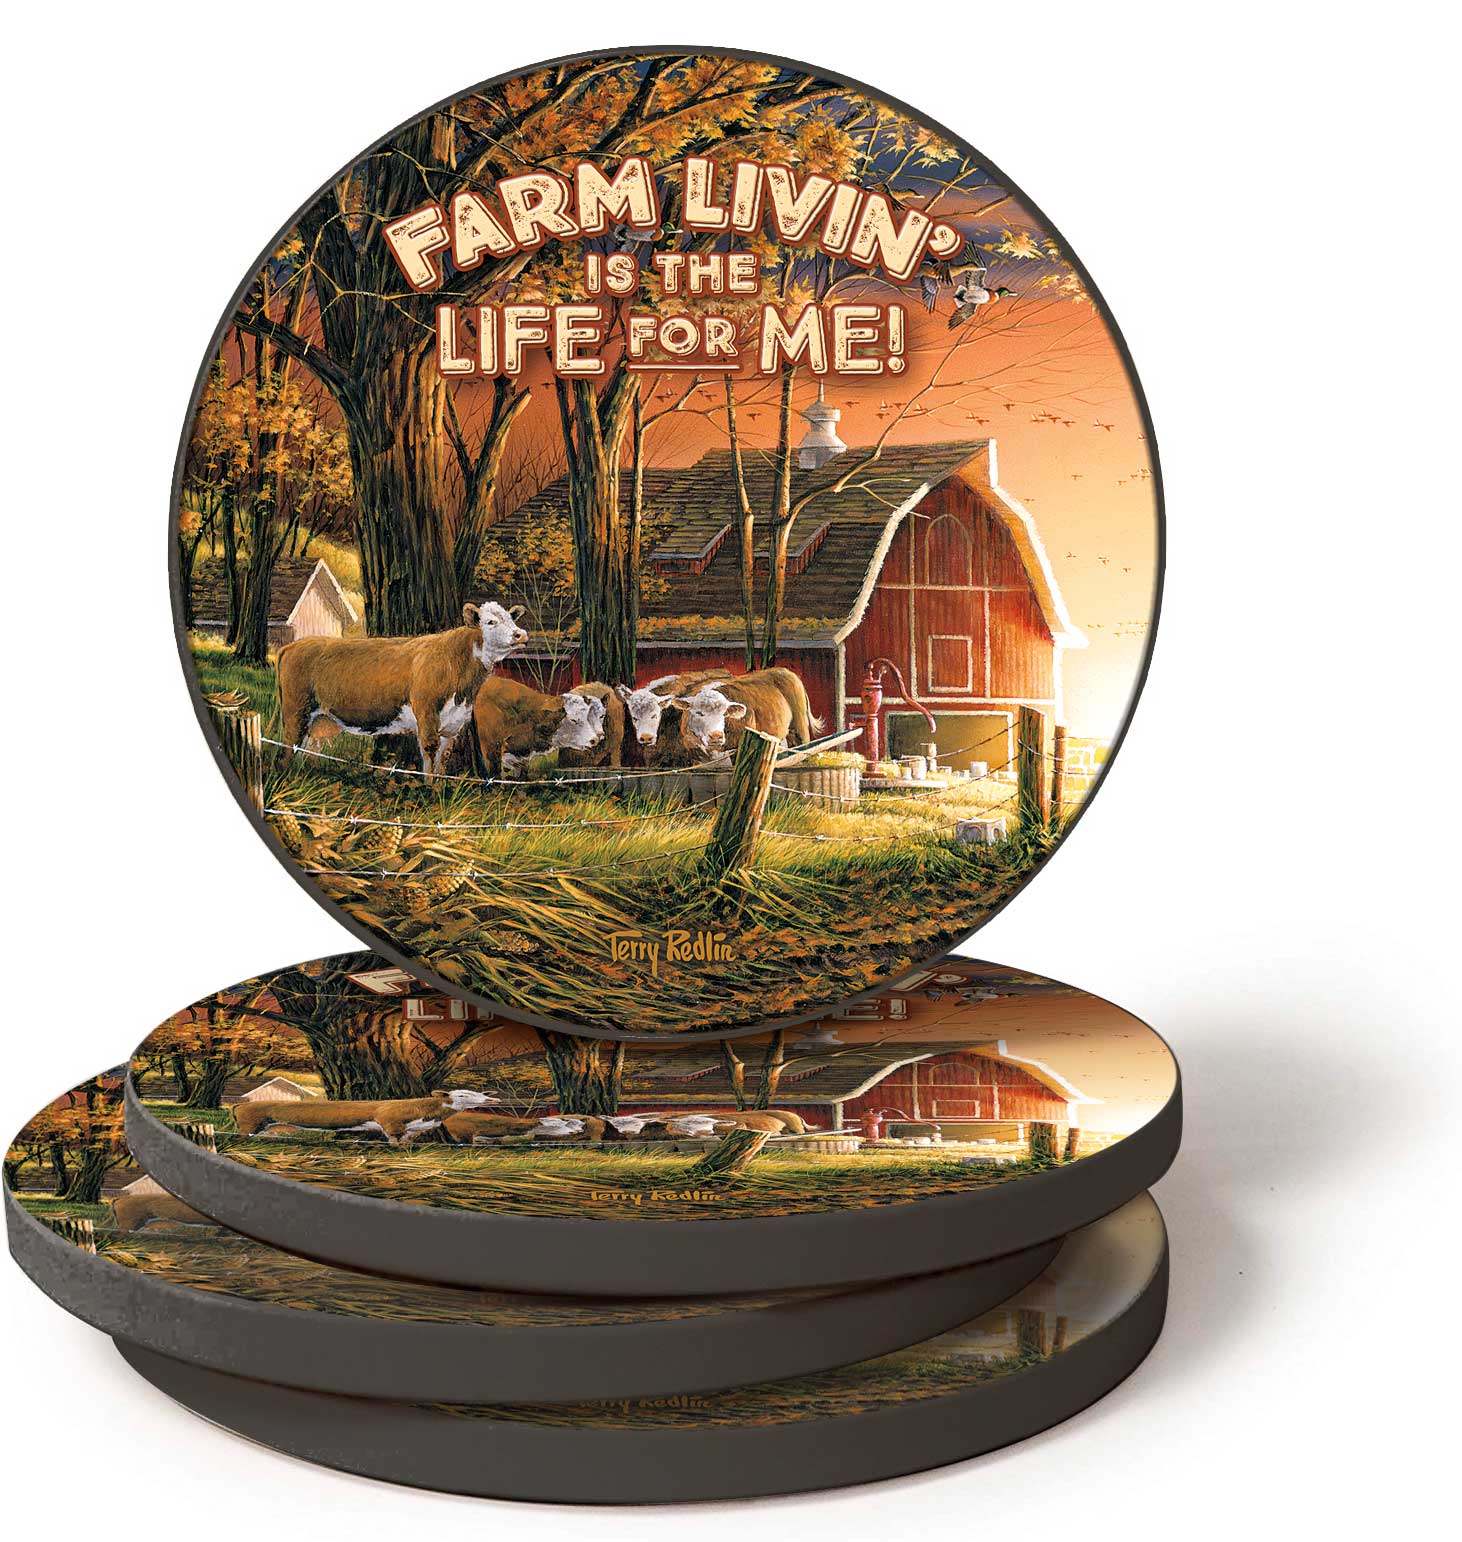 Morning Surprise Farm Livin’ – Set of 4 Coasters